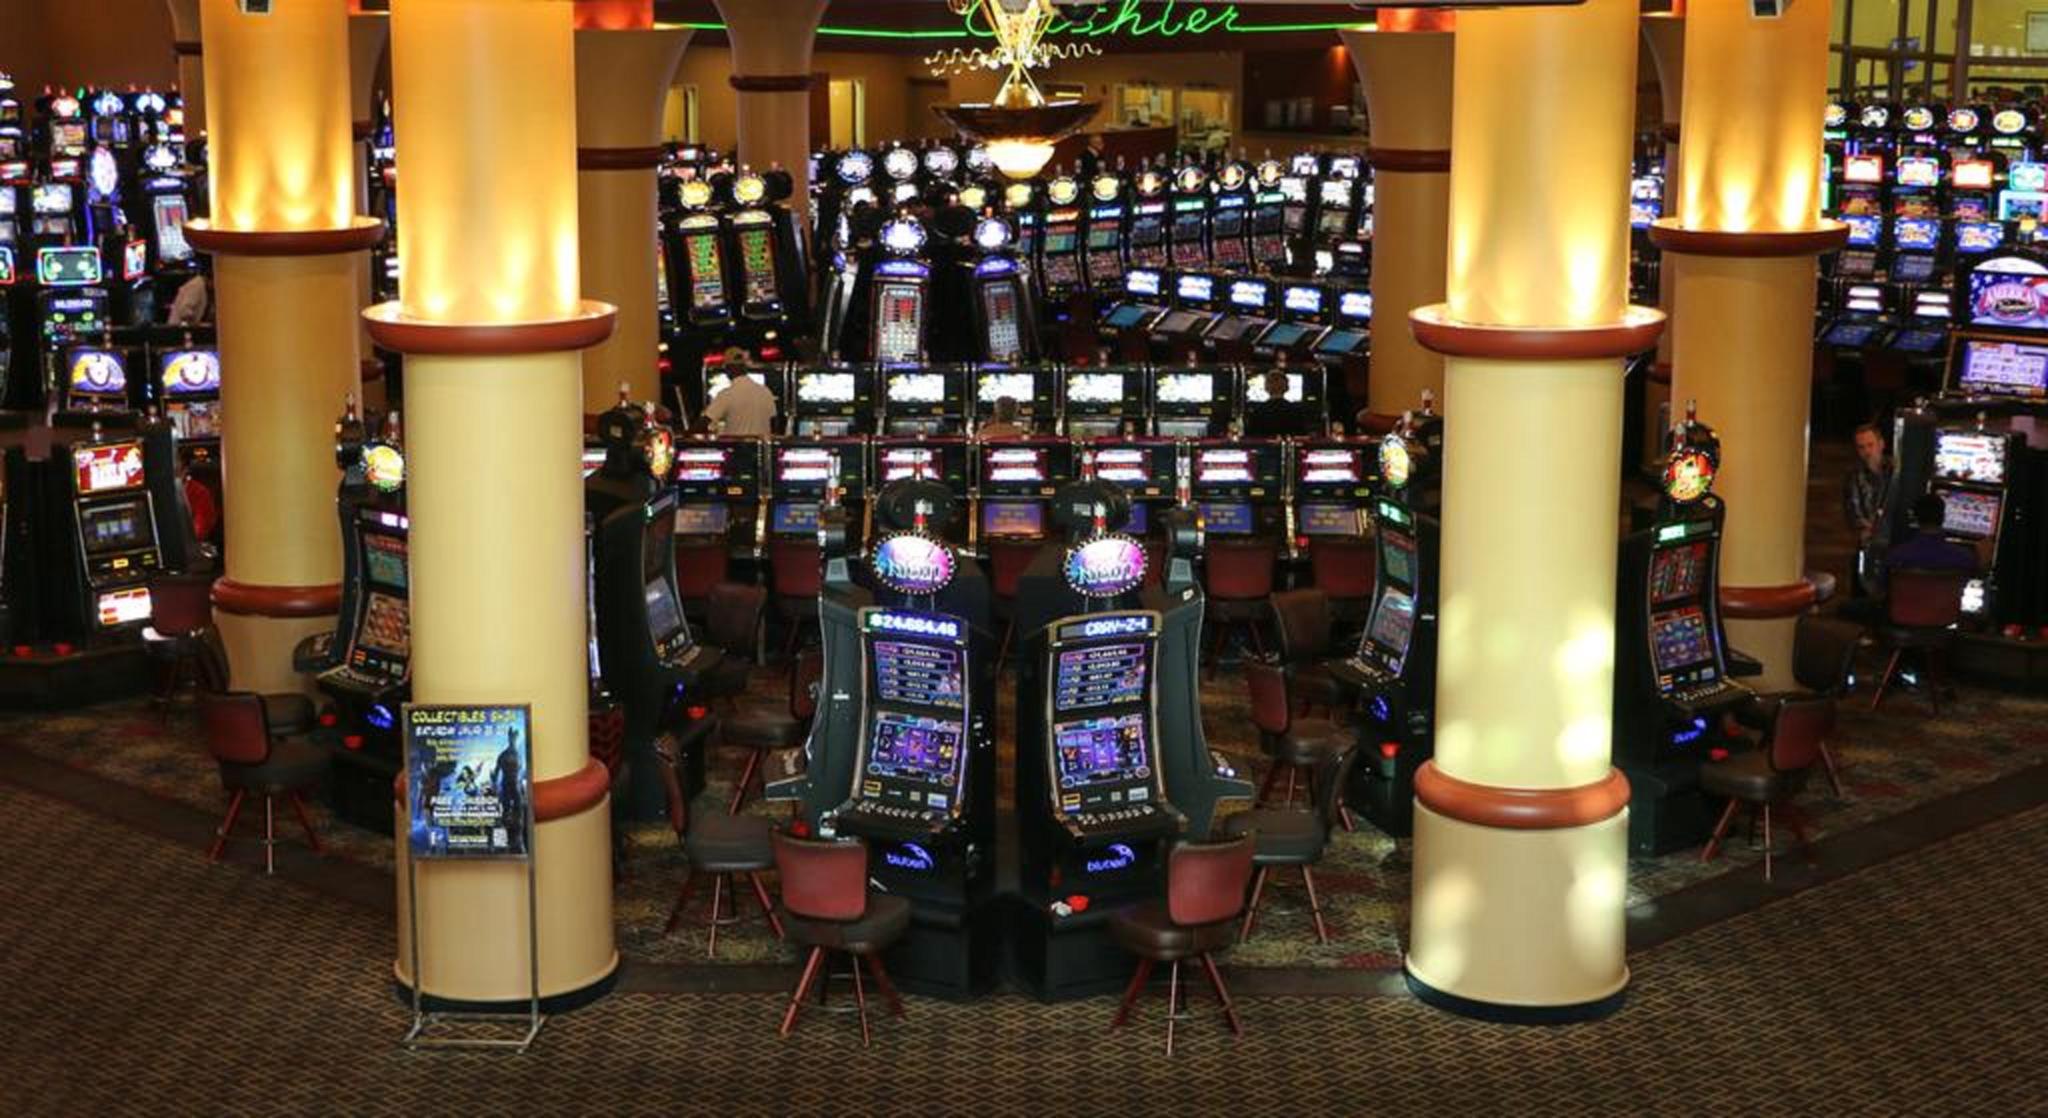 Miccosukee casino near me open